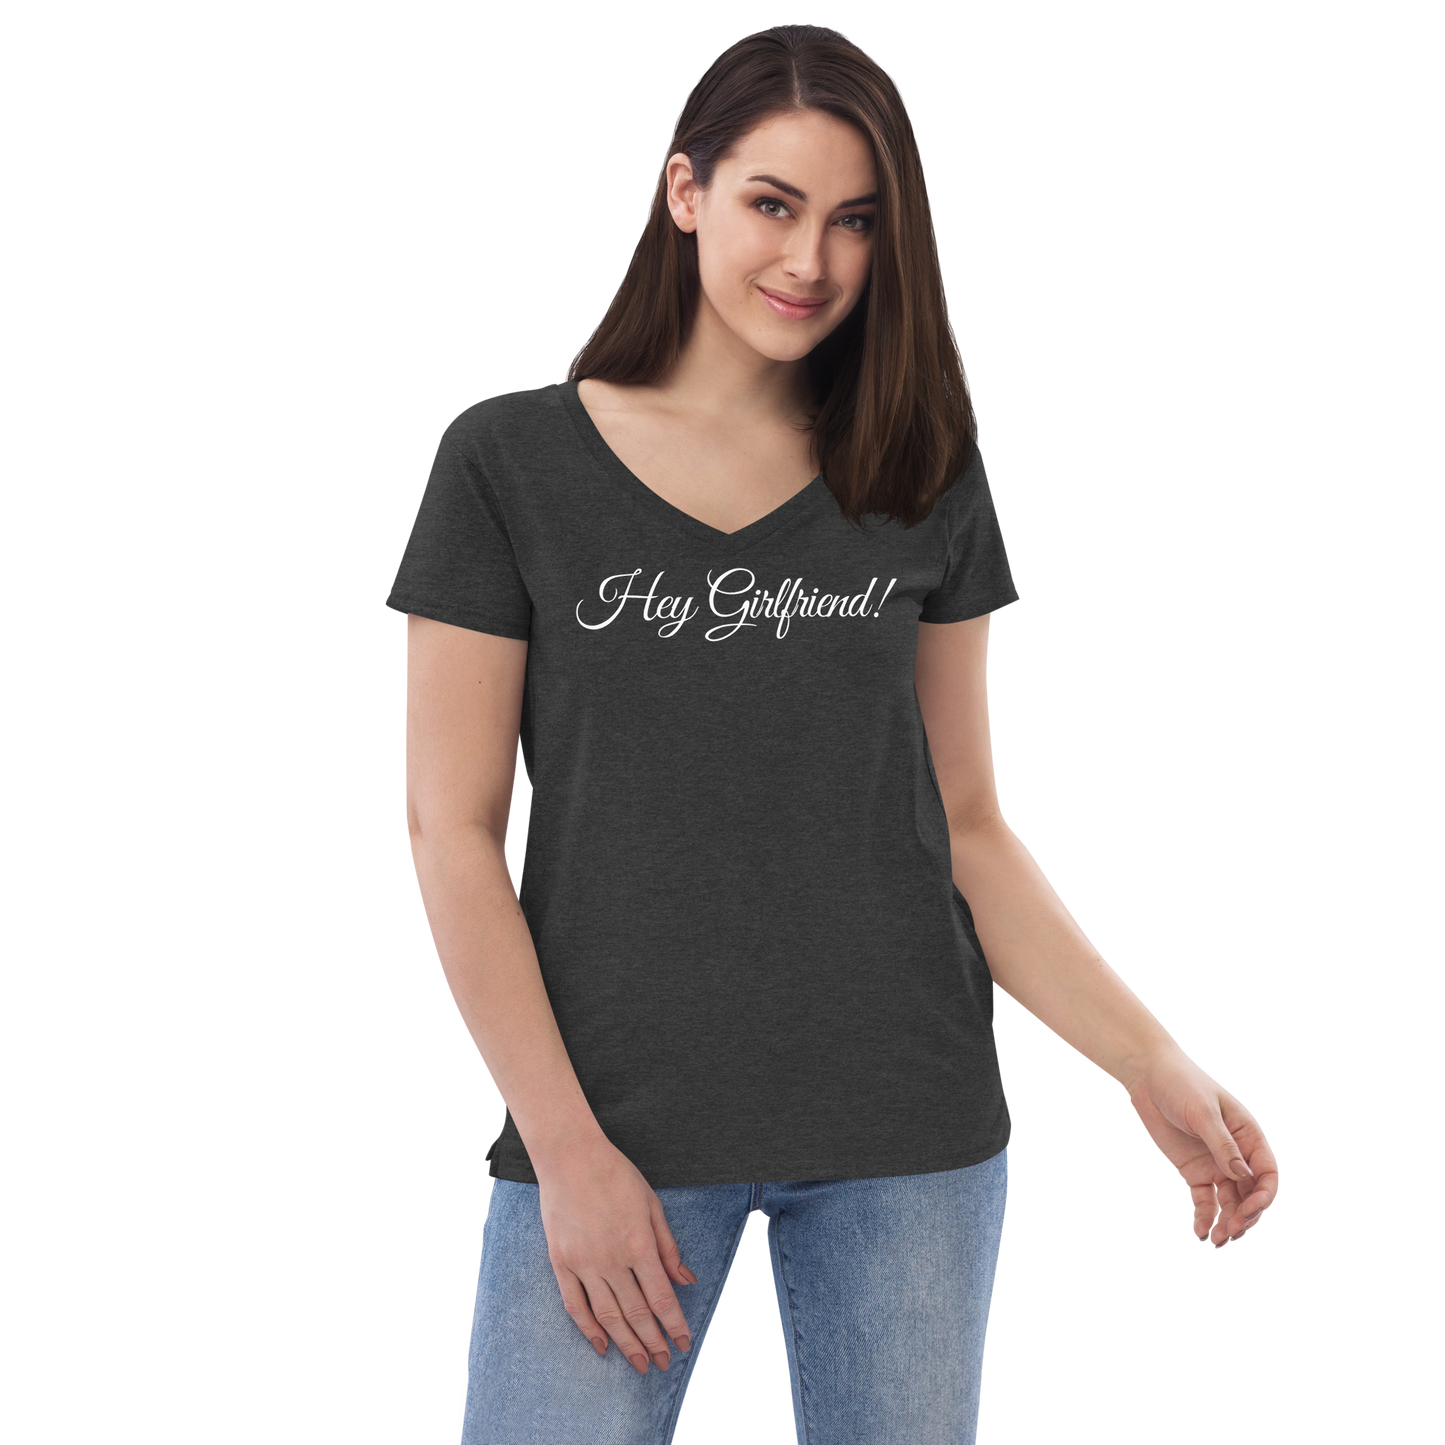 Hey Girlfriend! - Women’s Recycled V-Neck T-Shirt